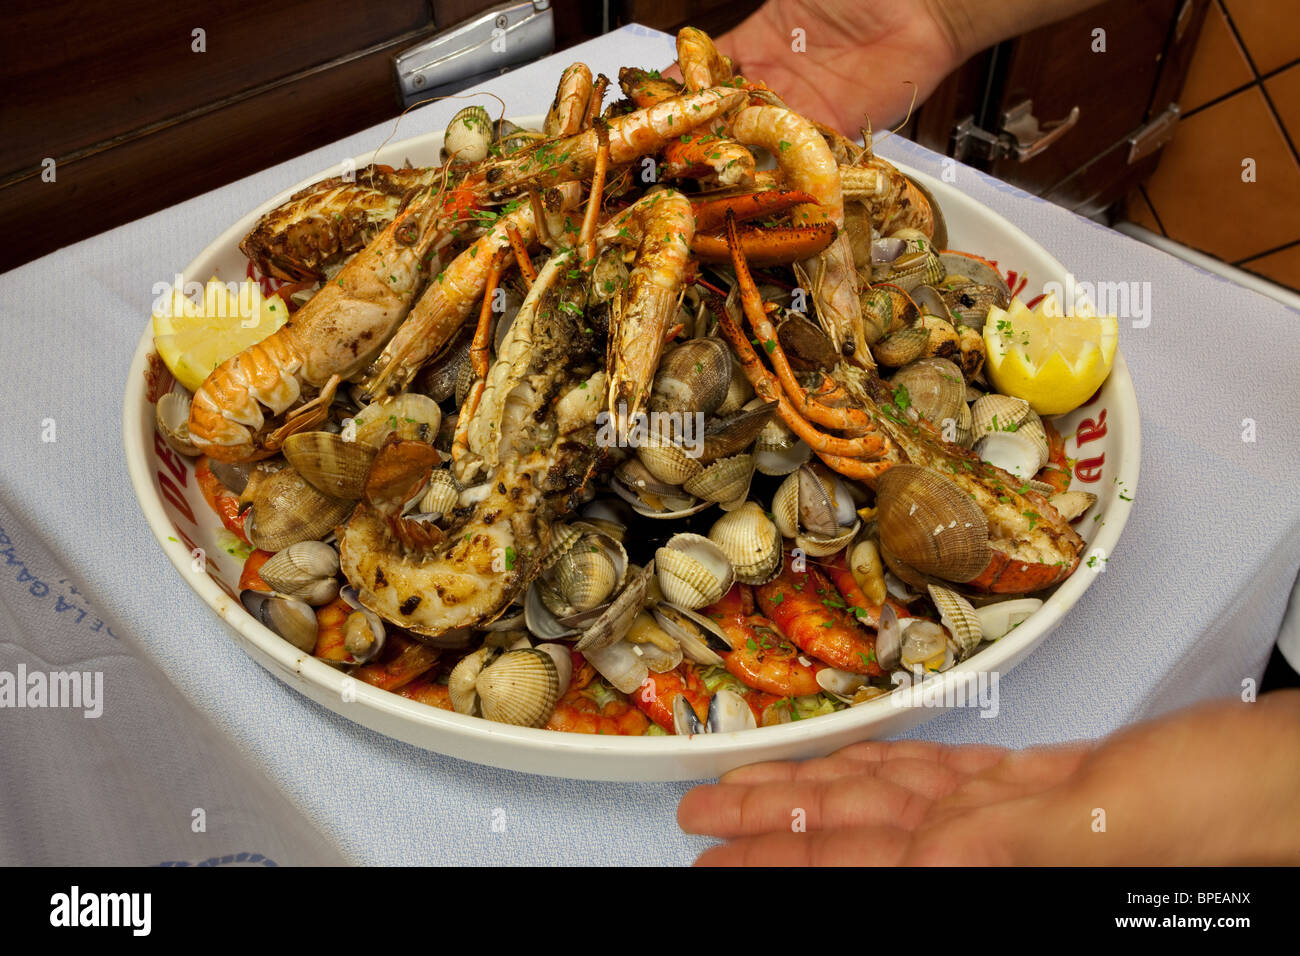 Barcelona displaying a dish of mariscada, Spain - Stock Image.